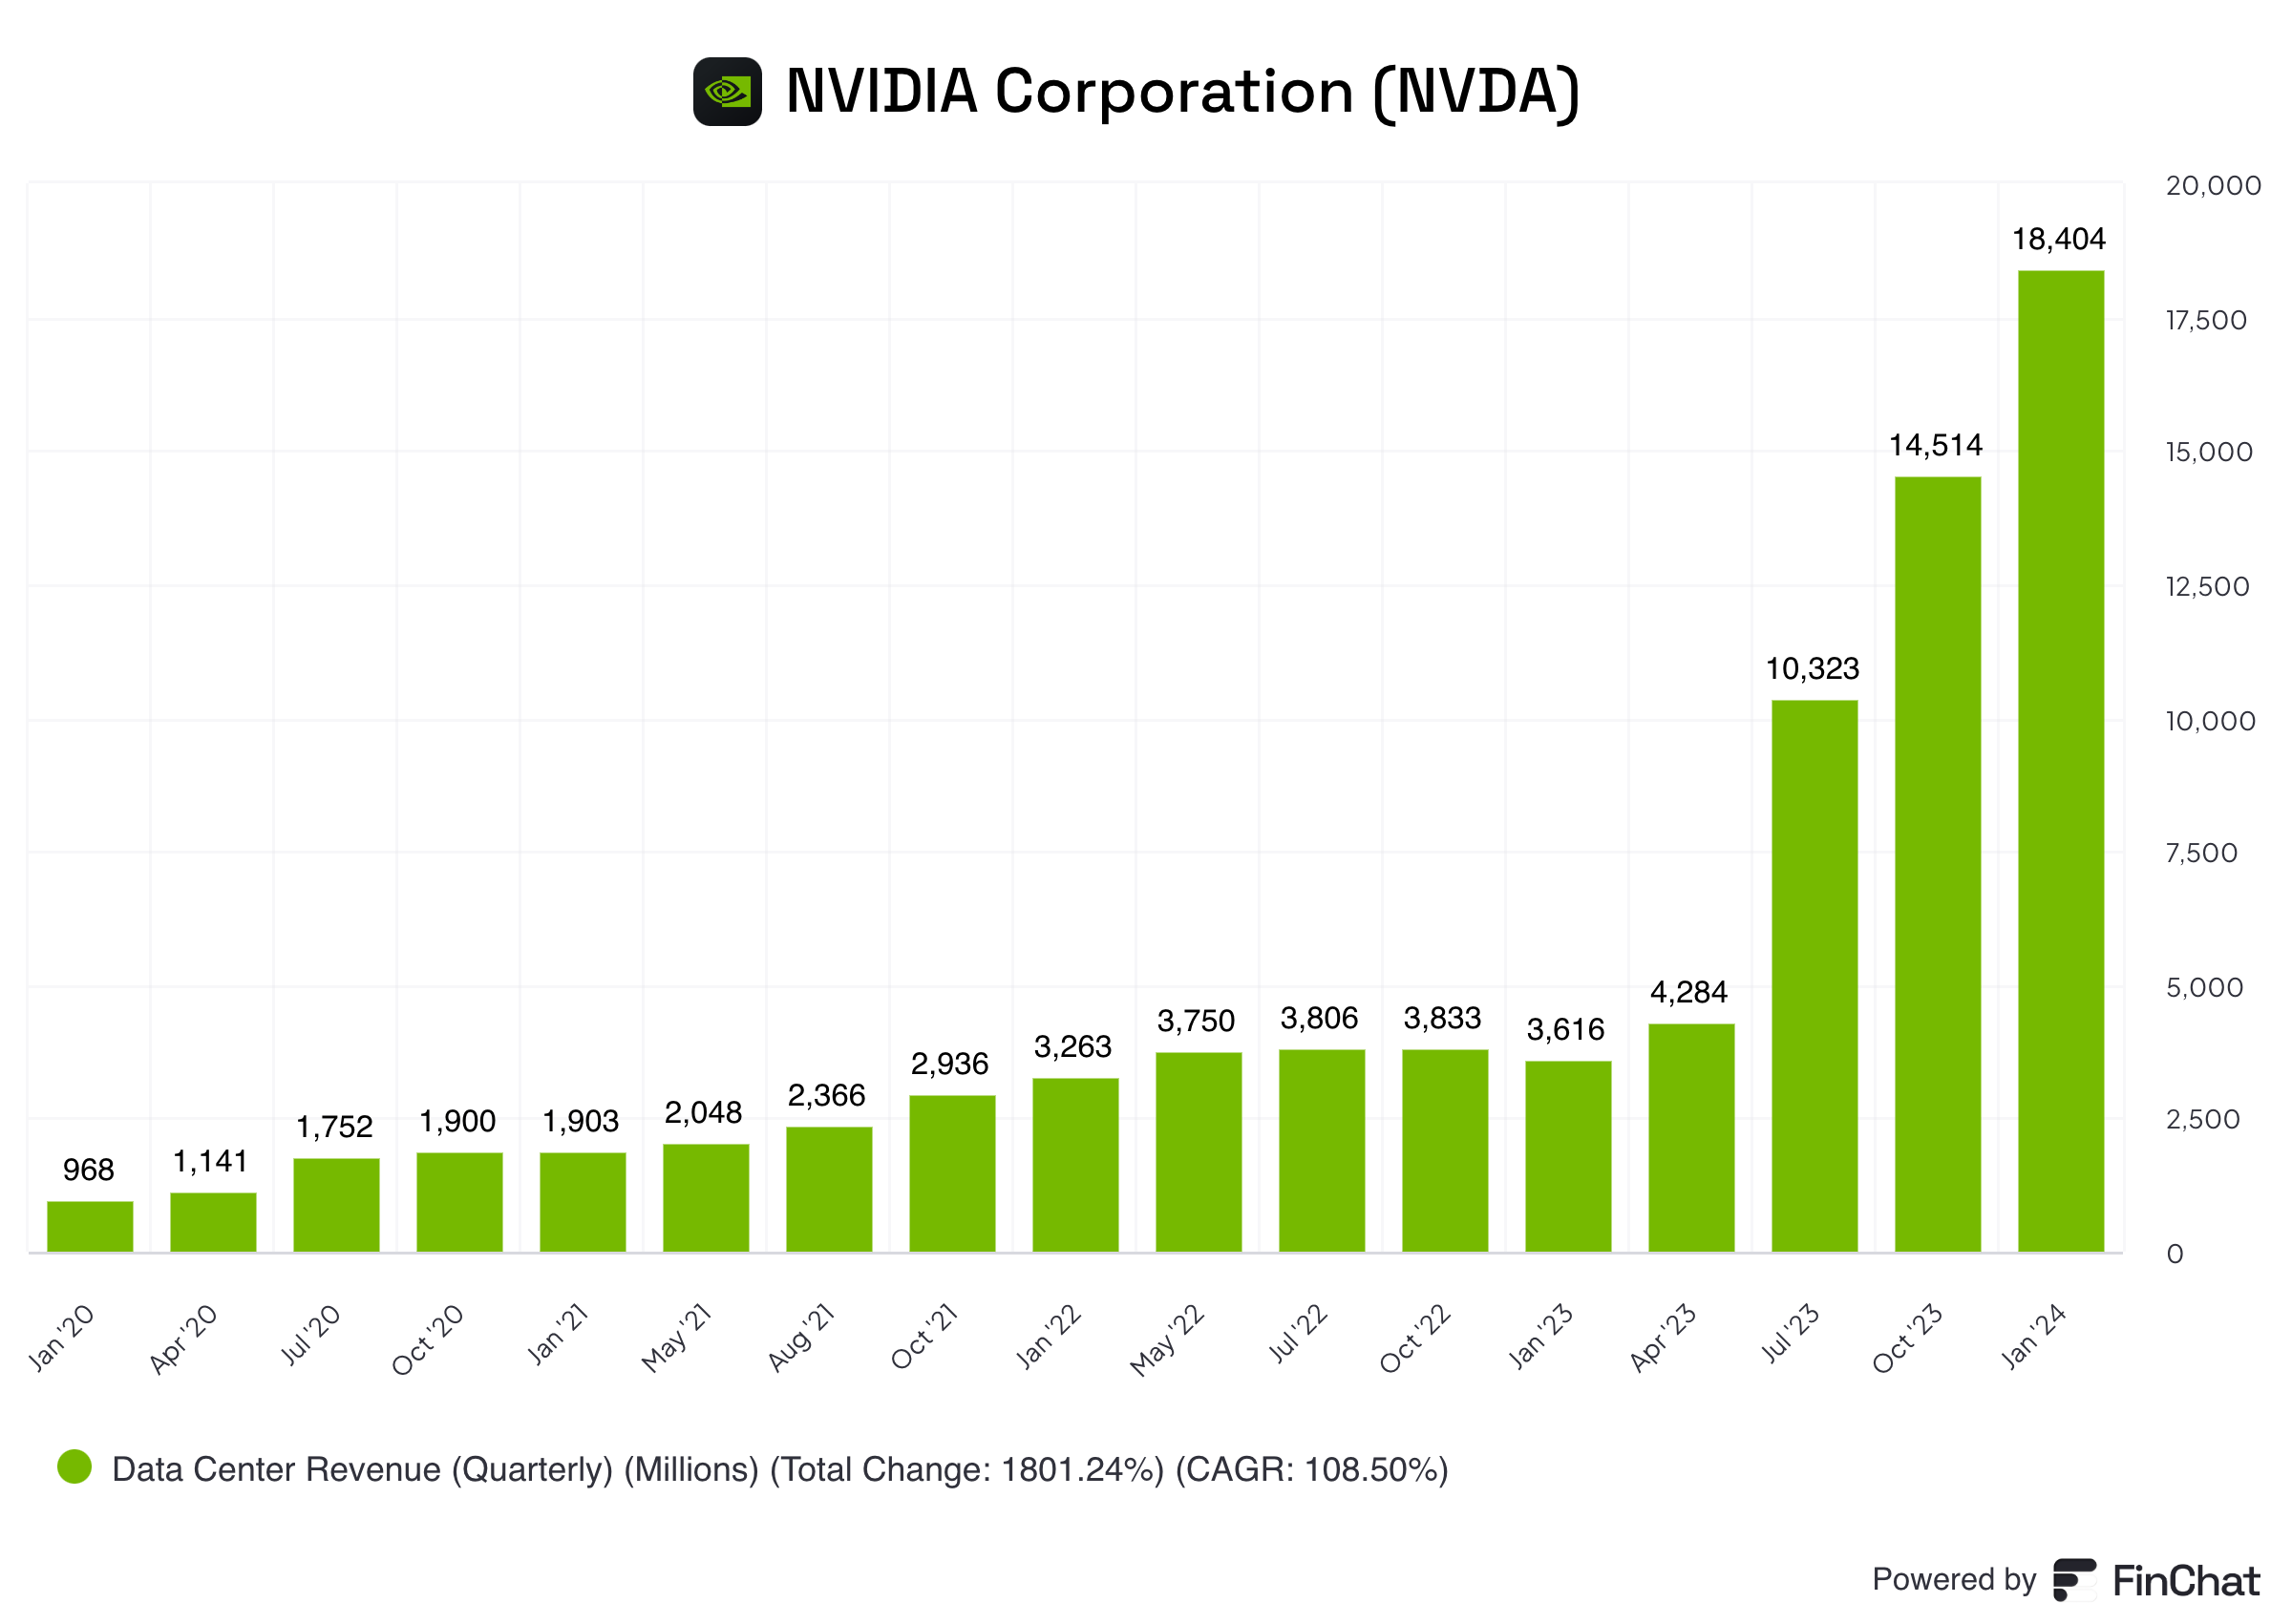 Druckenmiller Nvidia Investment